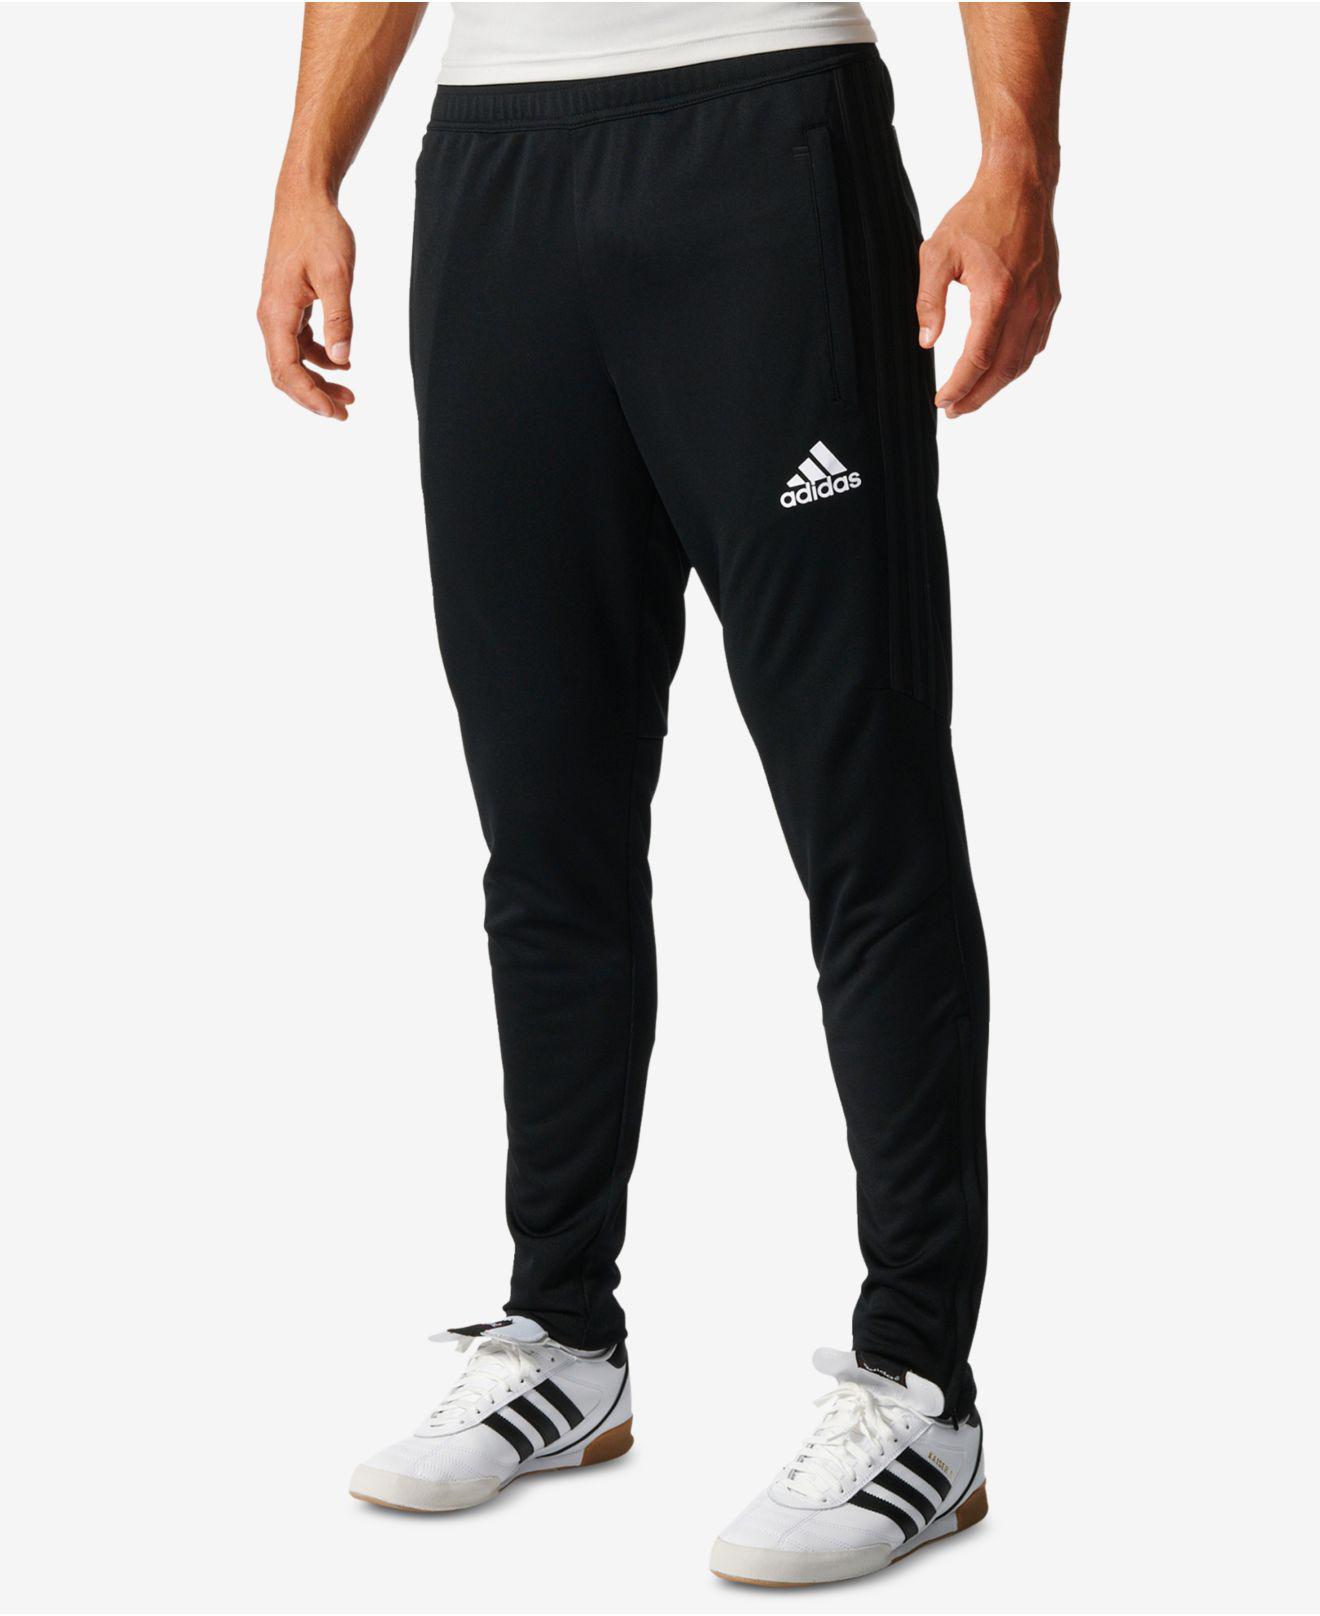 Adidas Climacool Pants Ankle Zip Drawstring Black White Soccer Boy's Small  S | eBay